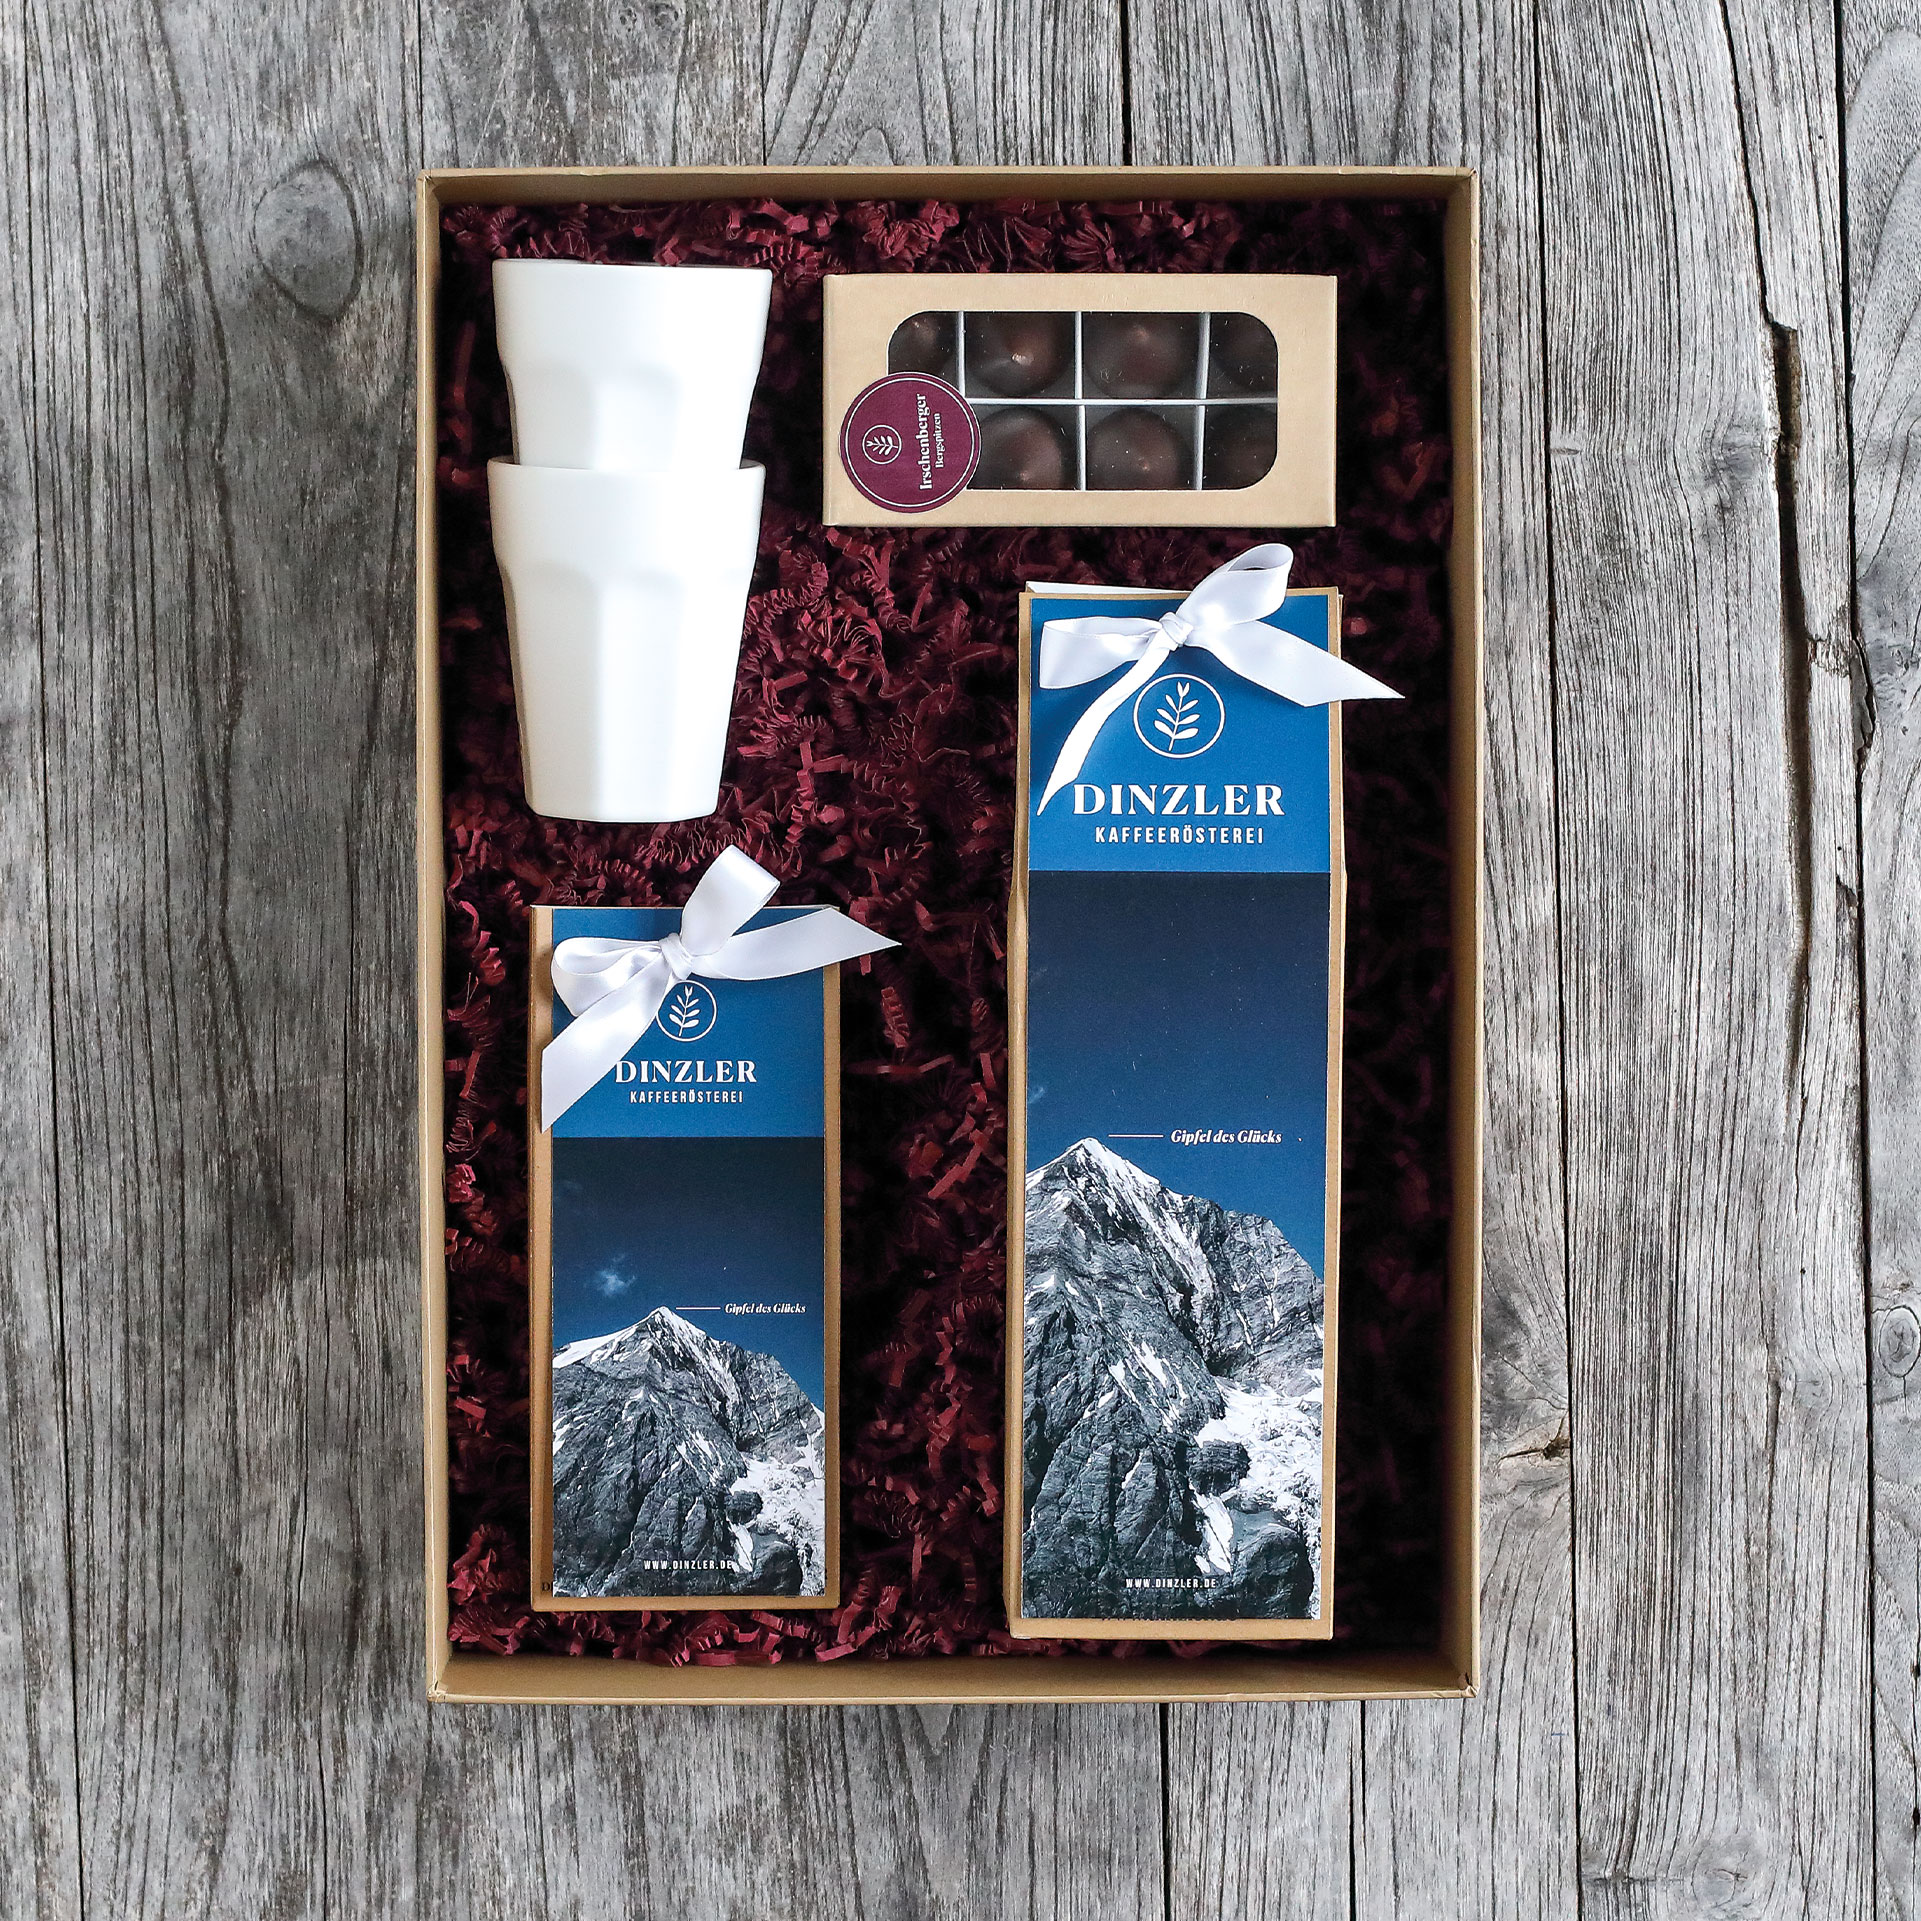 DINZLER Geschenkbox - "Gipfel des Glücks"| DINZLER Kaffeerösterei